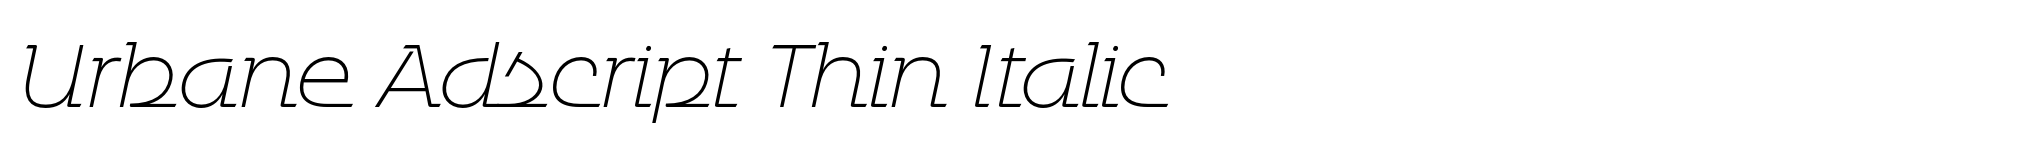 Urbane Adscript Thin Italic image